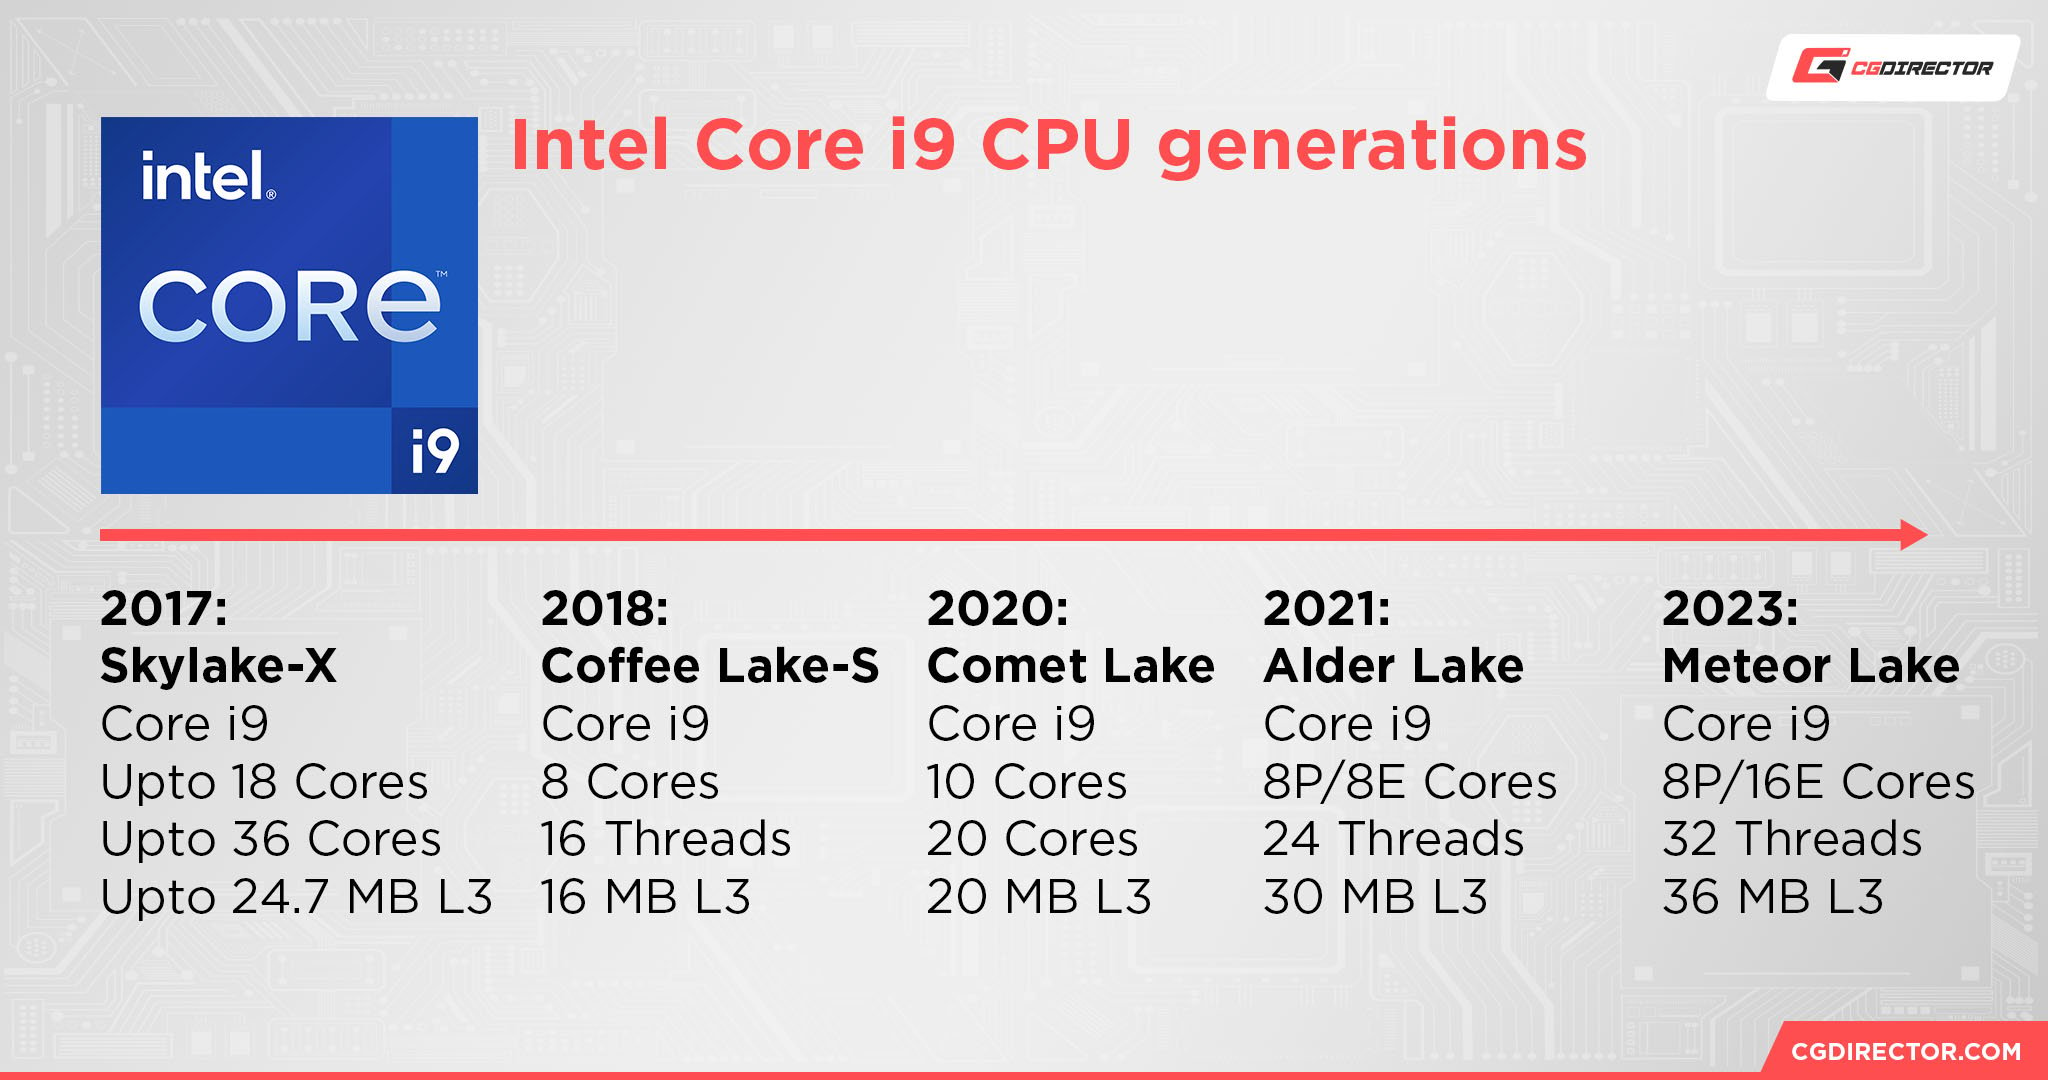 Intel Core i9 CPU generations